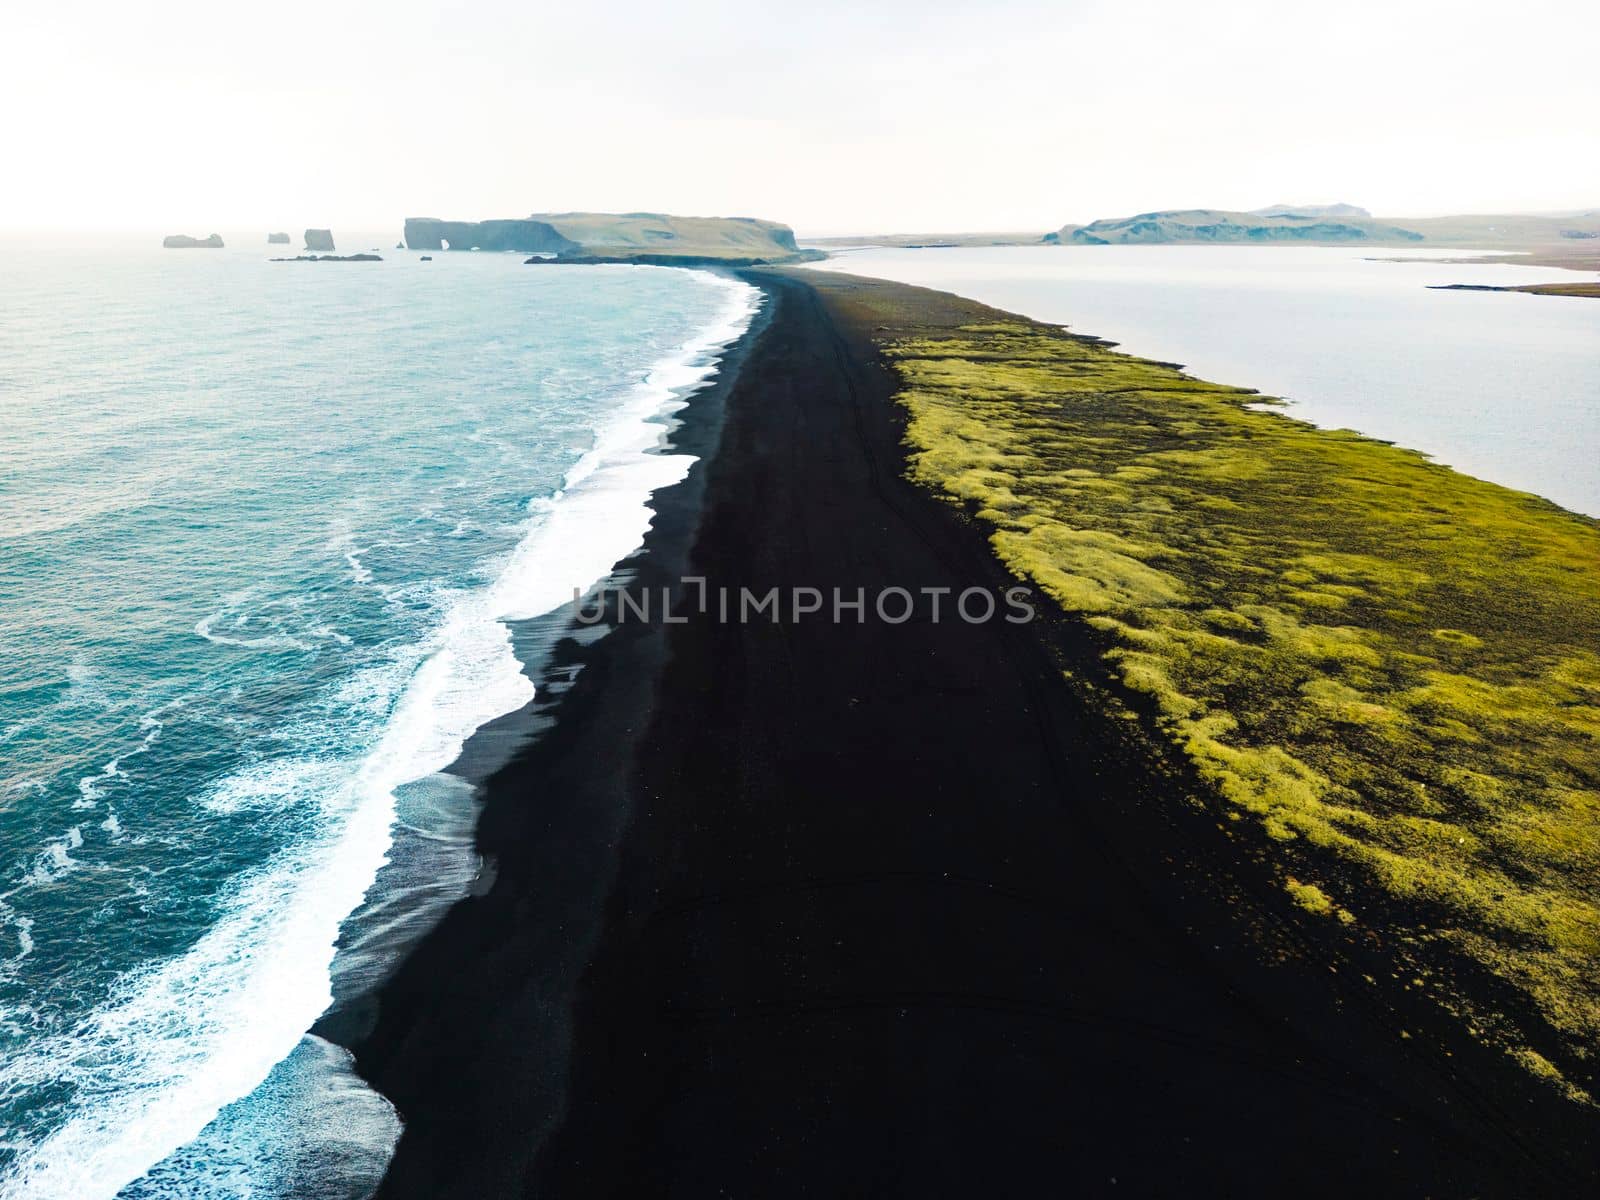 Volcanic Black Sand Beach with a view of Reynisdrangar. Waves crashing on the black sand beach. Vik, Iceland. High quality photo